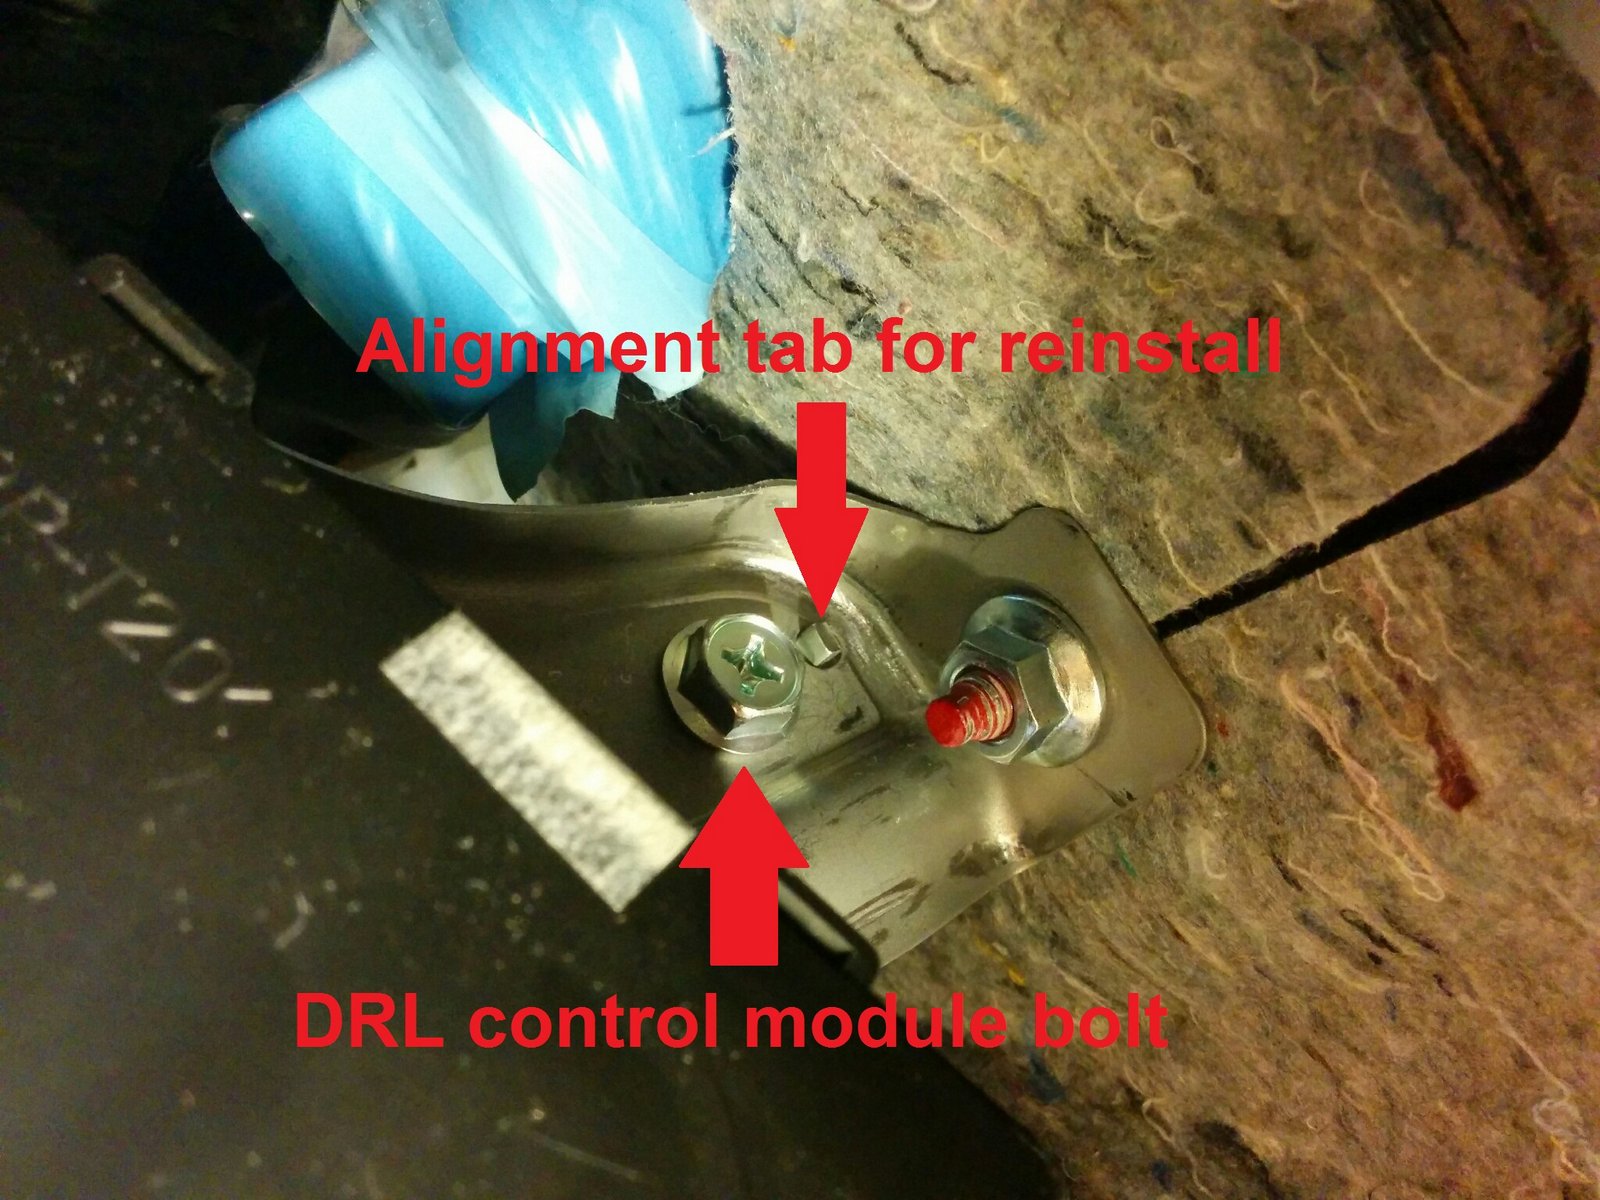 08 - DRL control module bolt.jpg